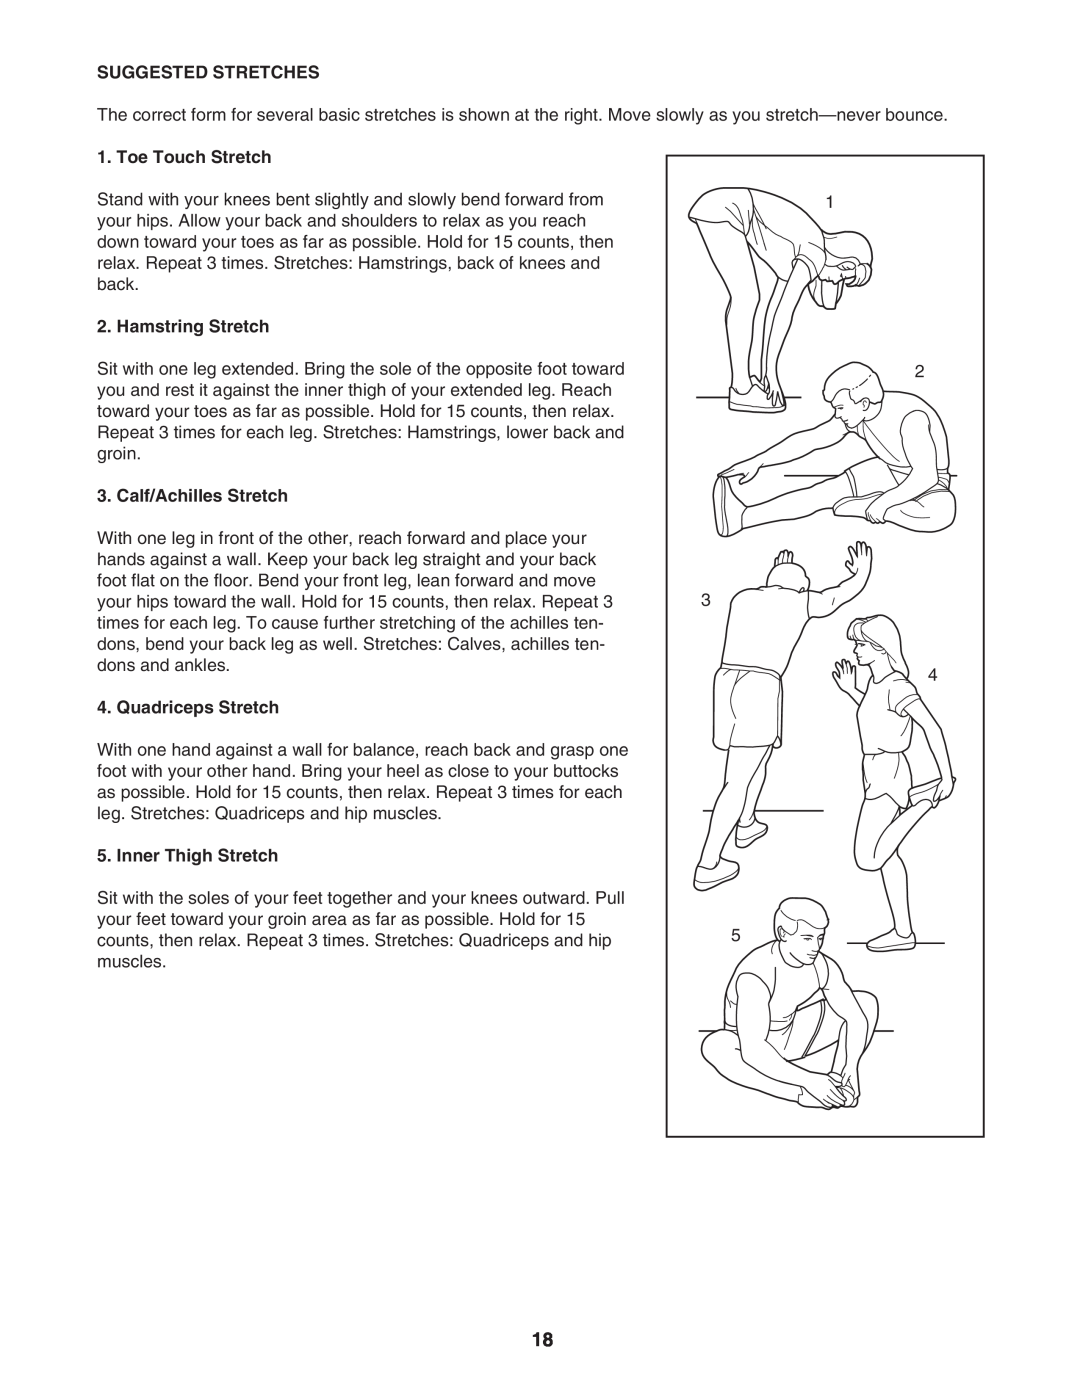 ProForm 831.295230 Suggested Stretches, Toe Touch Stretch, Hamstring Stretch, Calf/Achilles Stretch, Quadriceps Stretch 